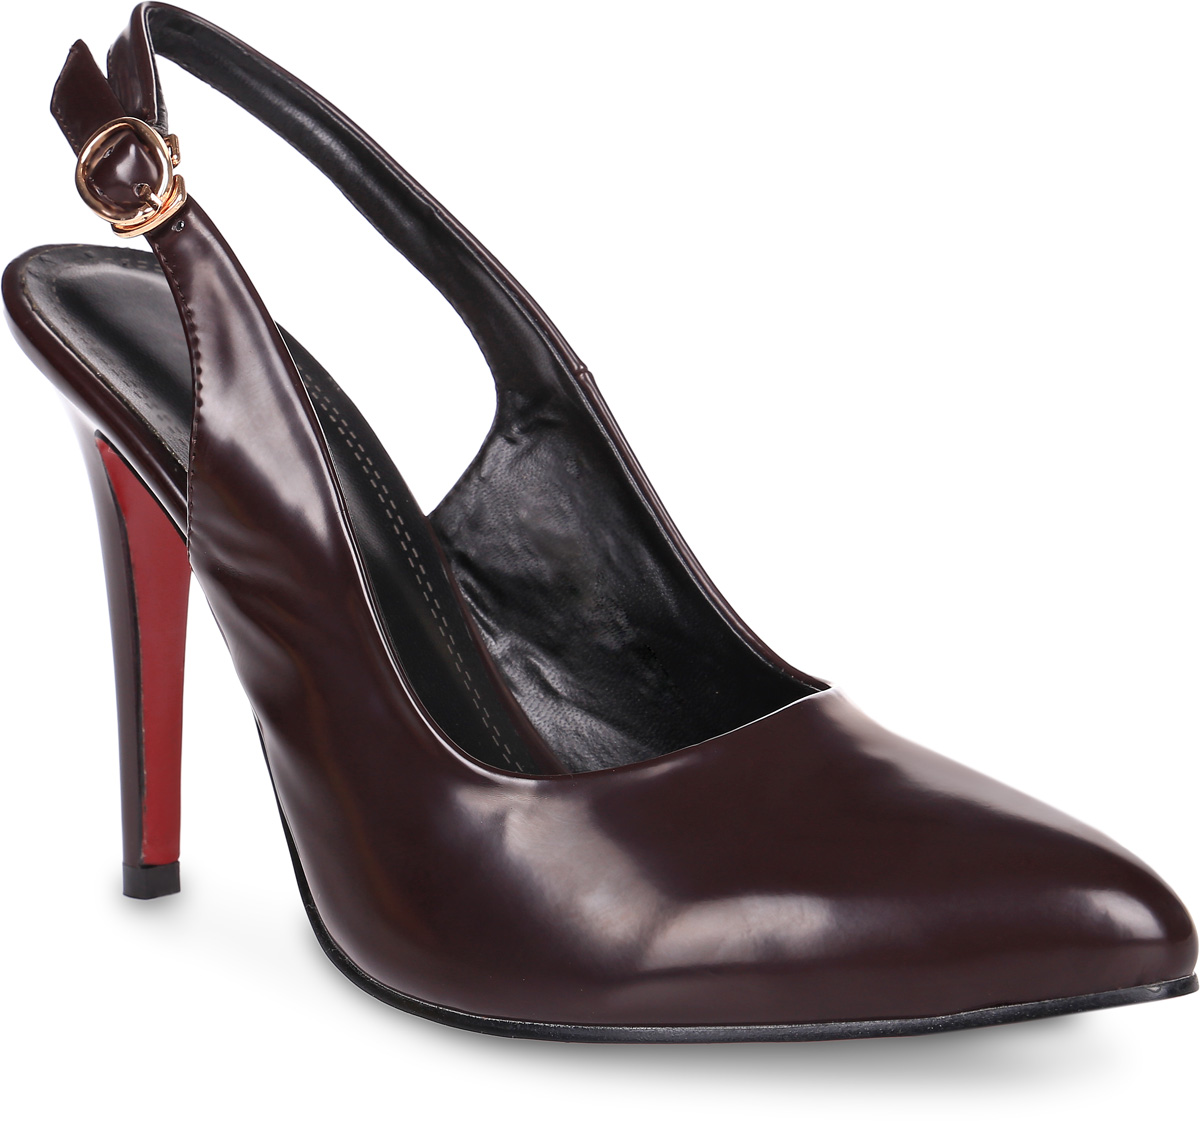 Туфли женские Inario, цвет: коричневый. 17068-01-18. Размер 39